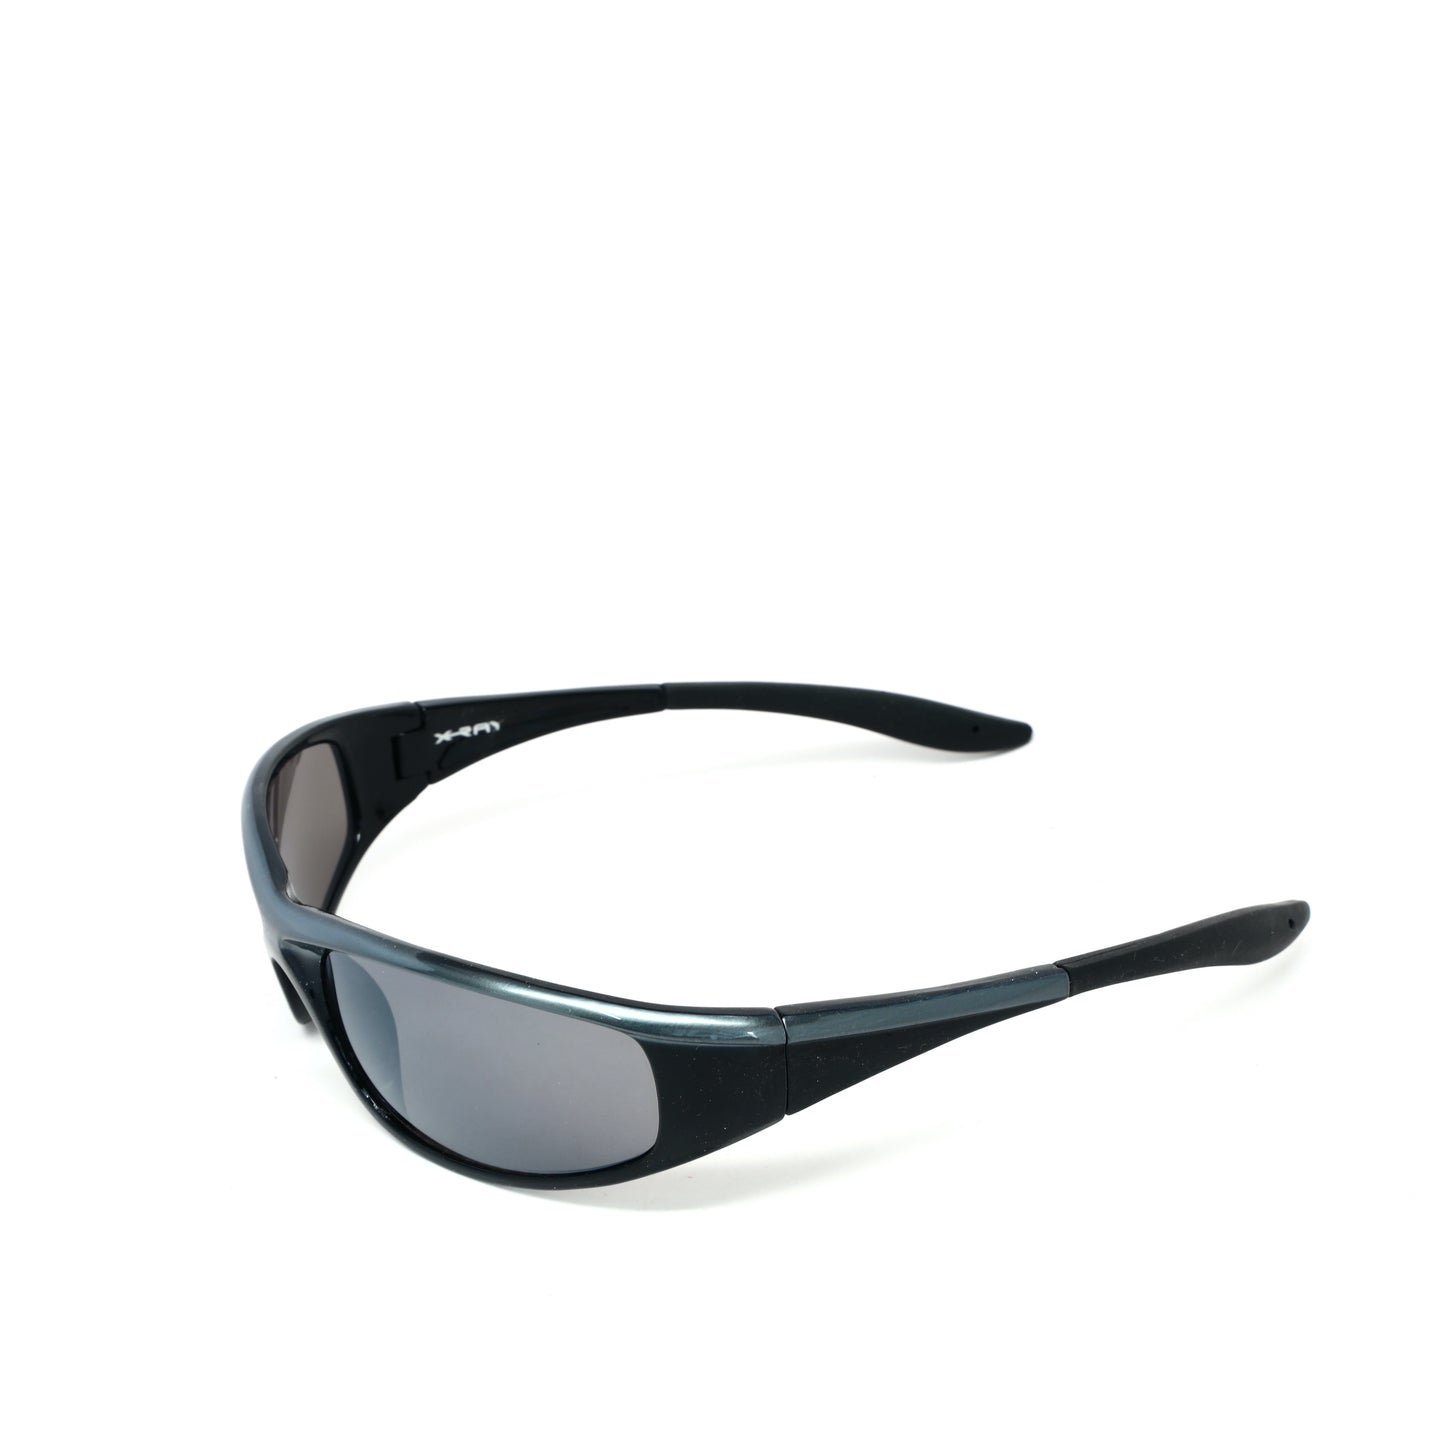 Prototype 5 X-Ray Deadstock Two Tone Wraparound Visor Sunglasses - Grey